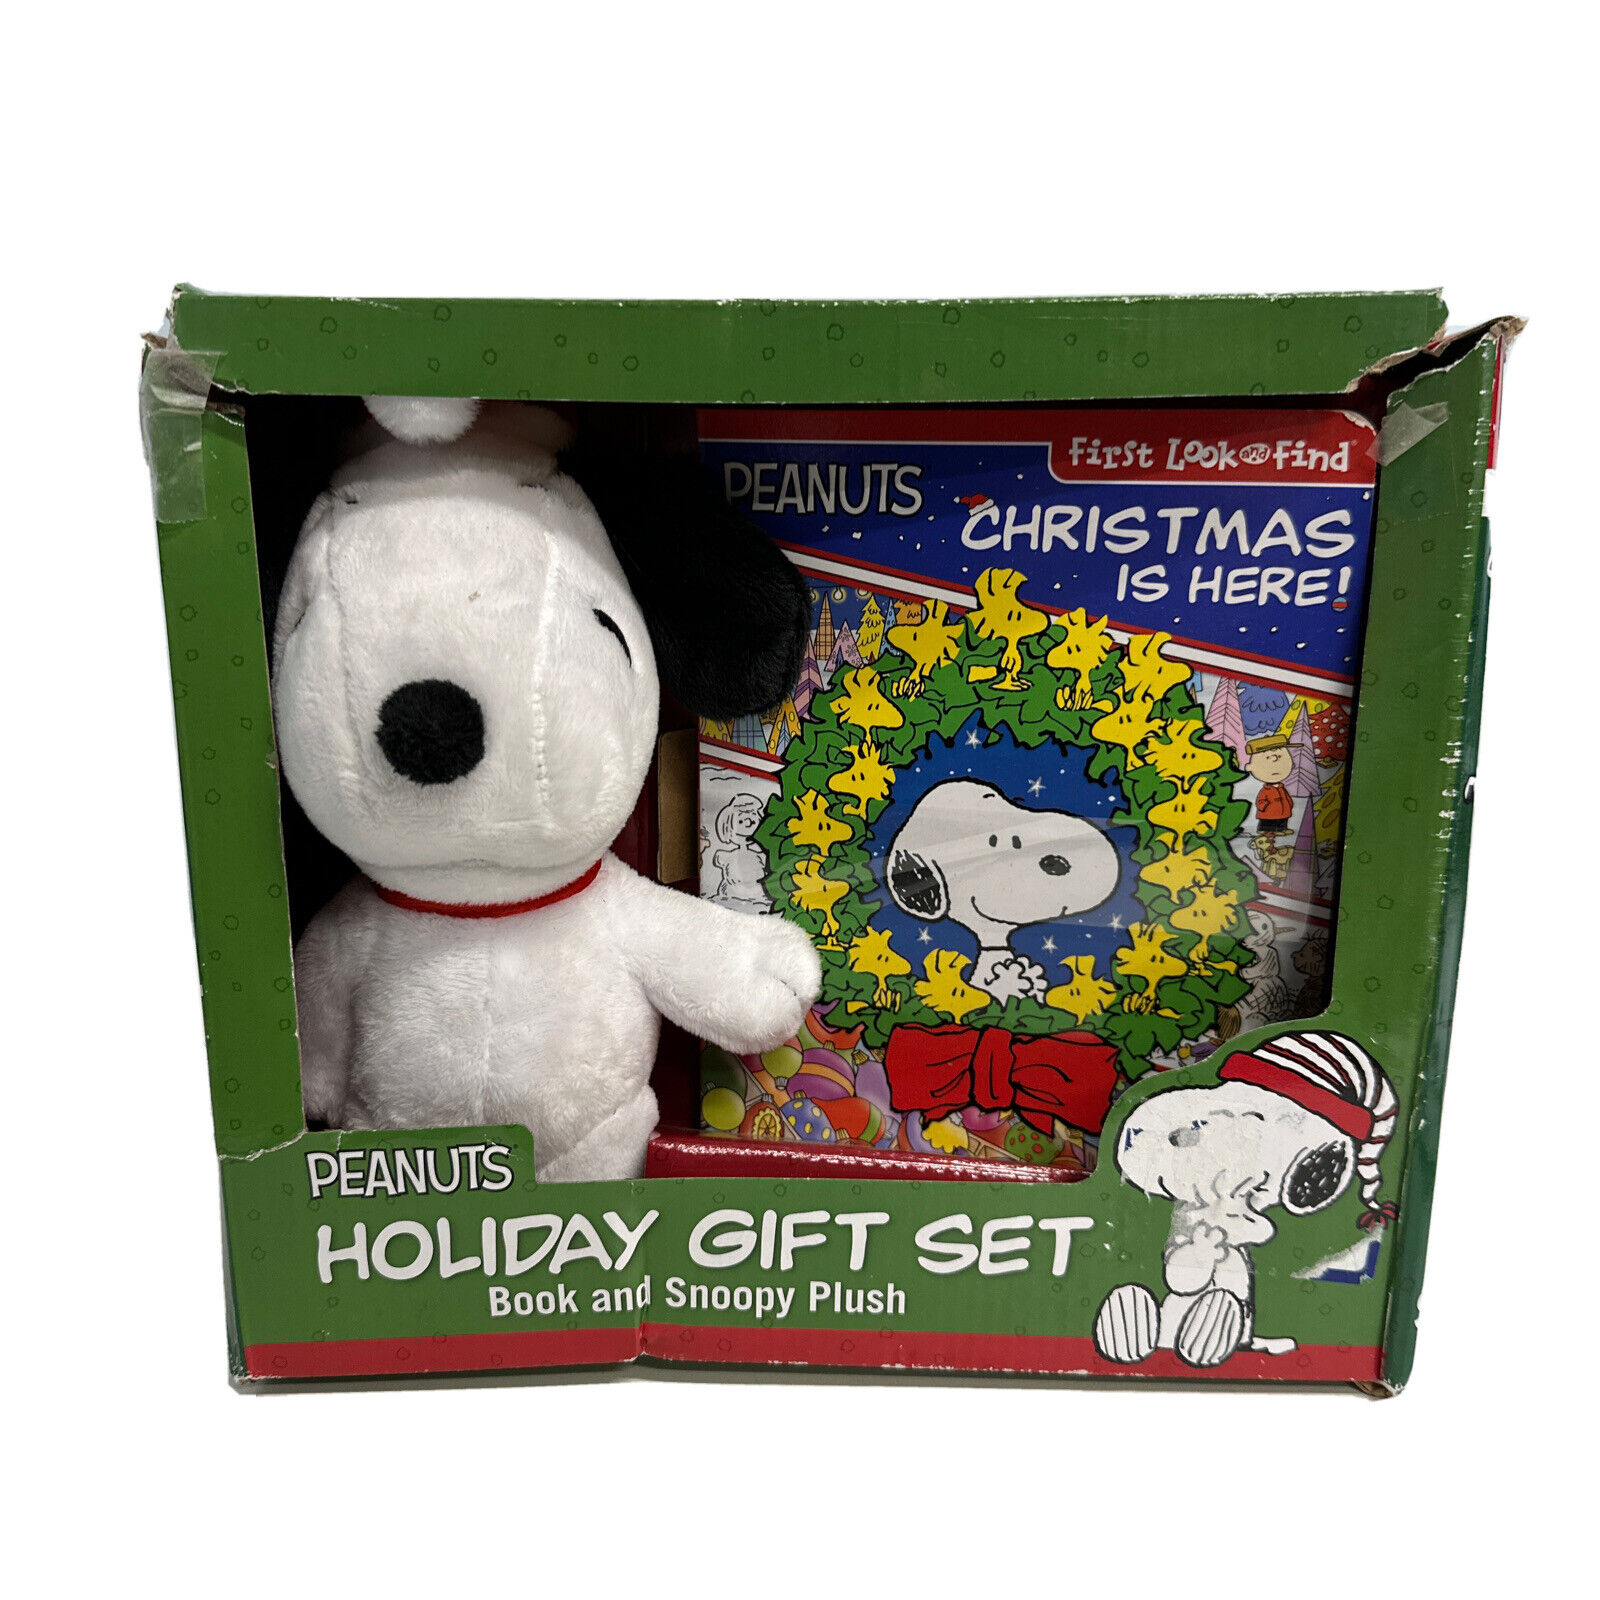 Peanuts Christmas Holiday Gift Set Plush Snoopy with book NEW-Box distress photo